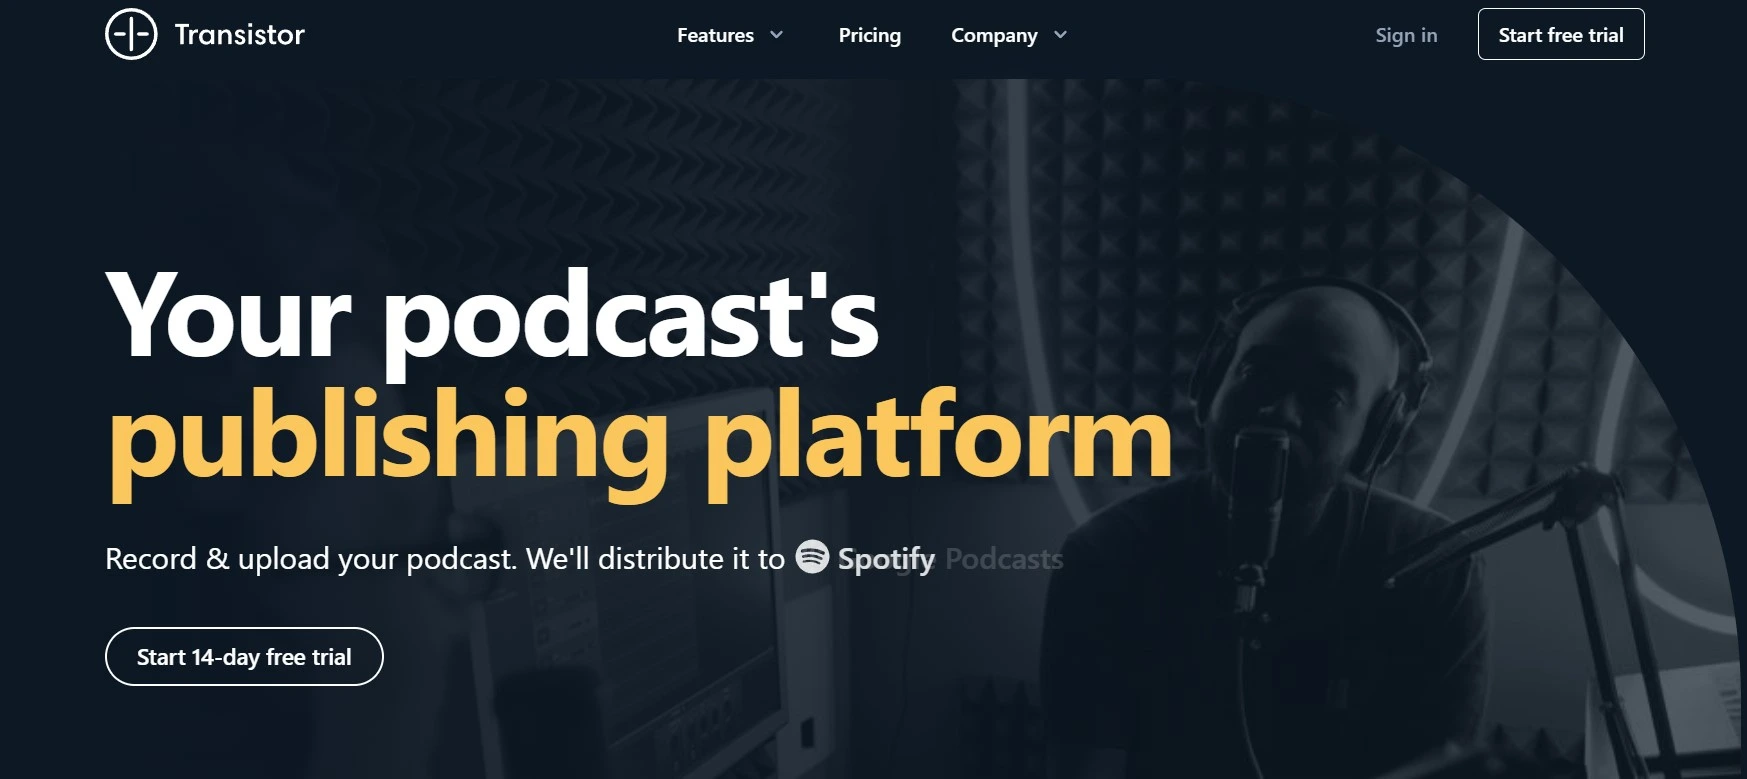 Transistor modern podcasting hosting